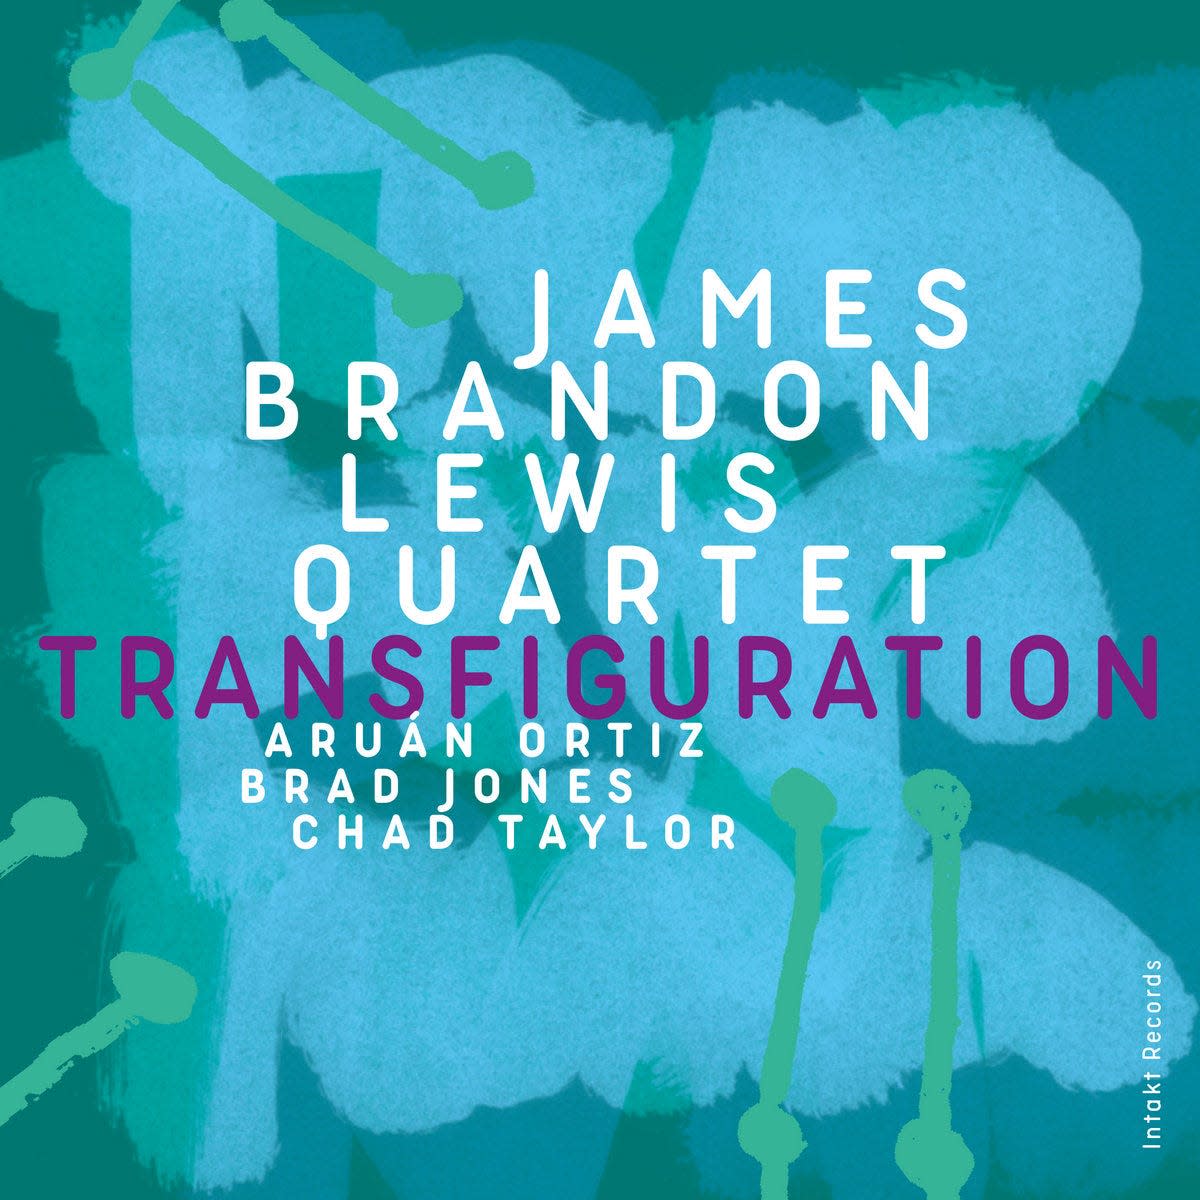 James Brandon Lewis Quartet, "Transfiguration"